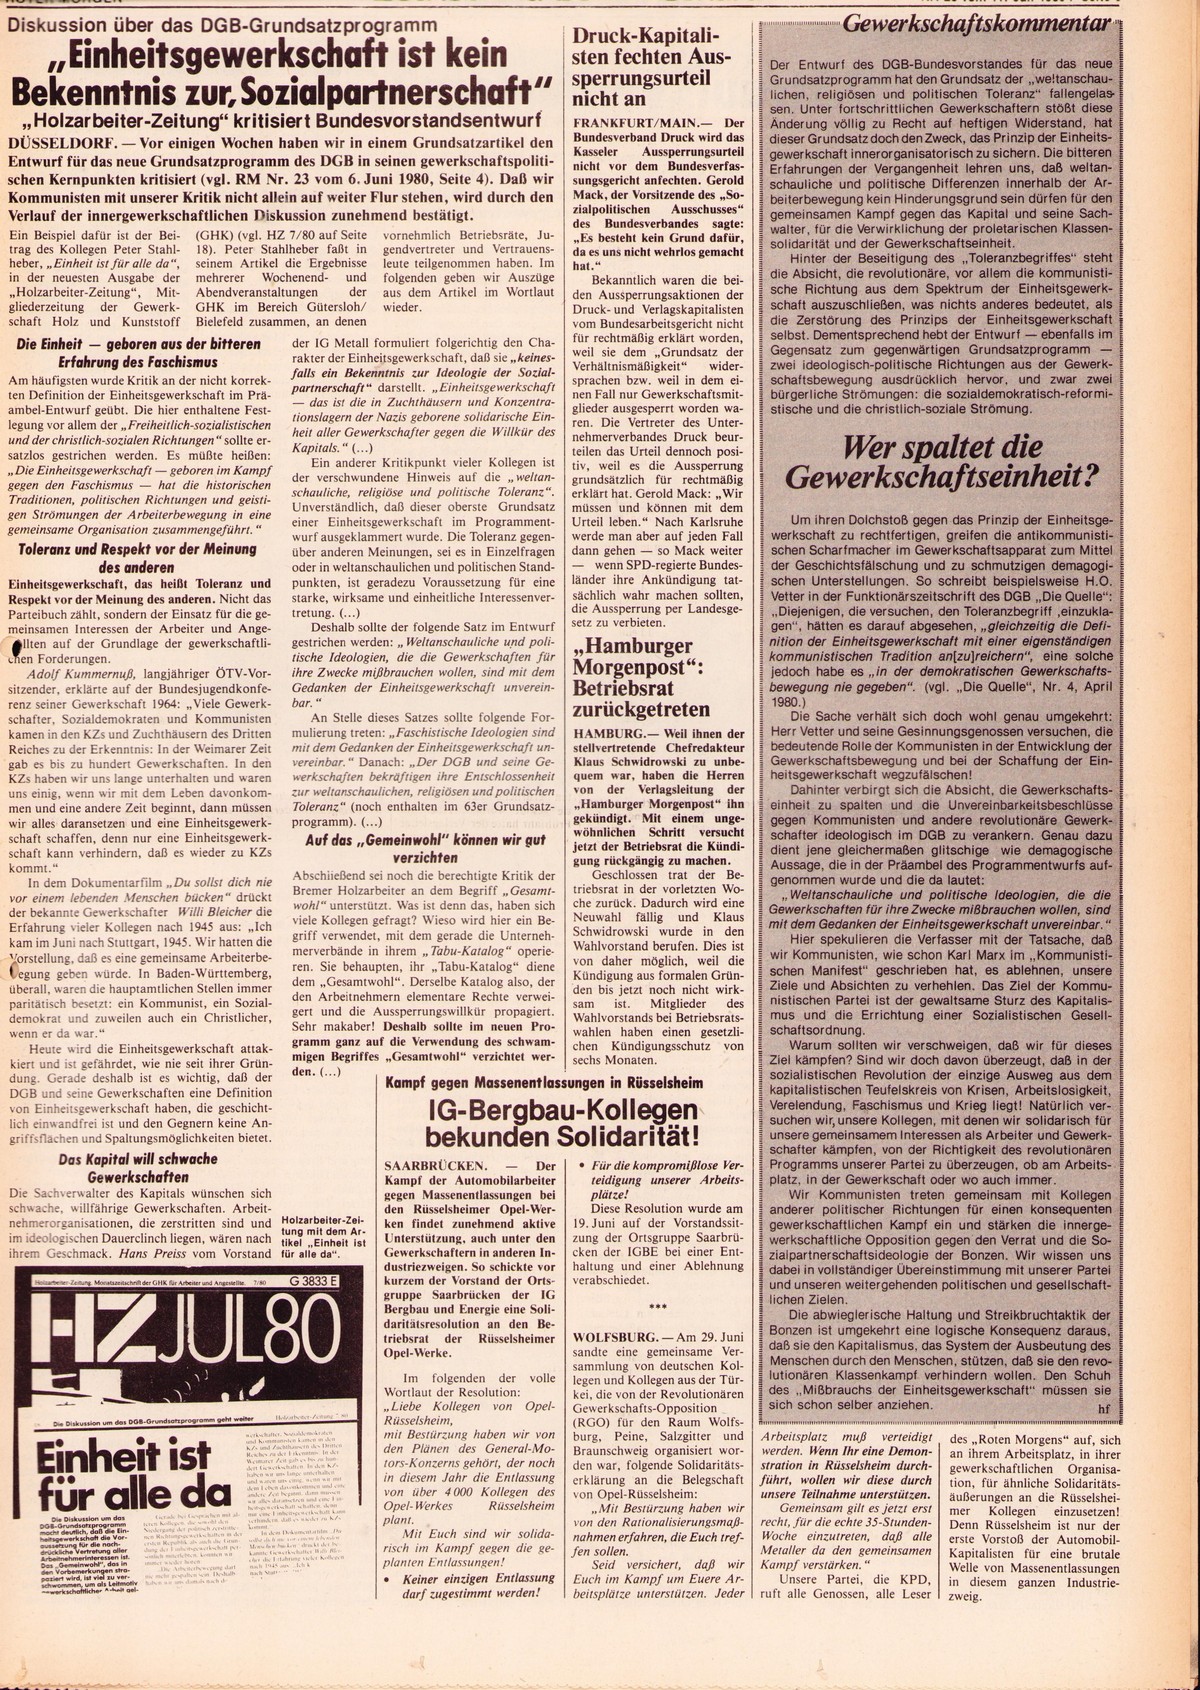 Roter Morgen, 14. Jg., 11. Juli 1980, Nr. 28, Seite 5